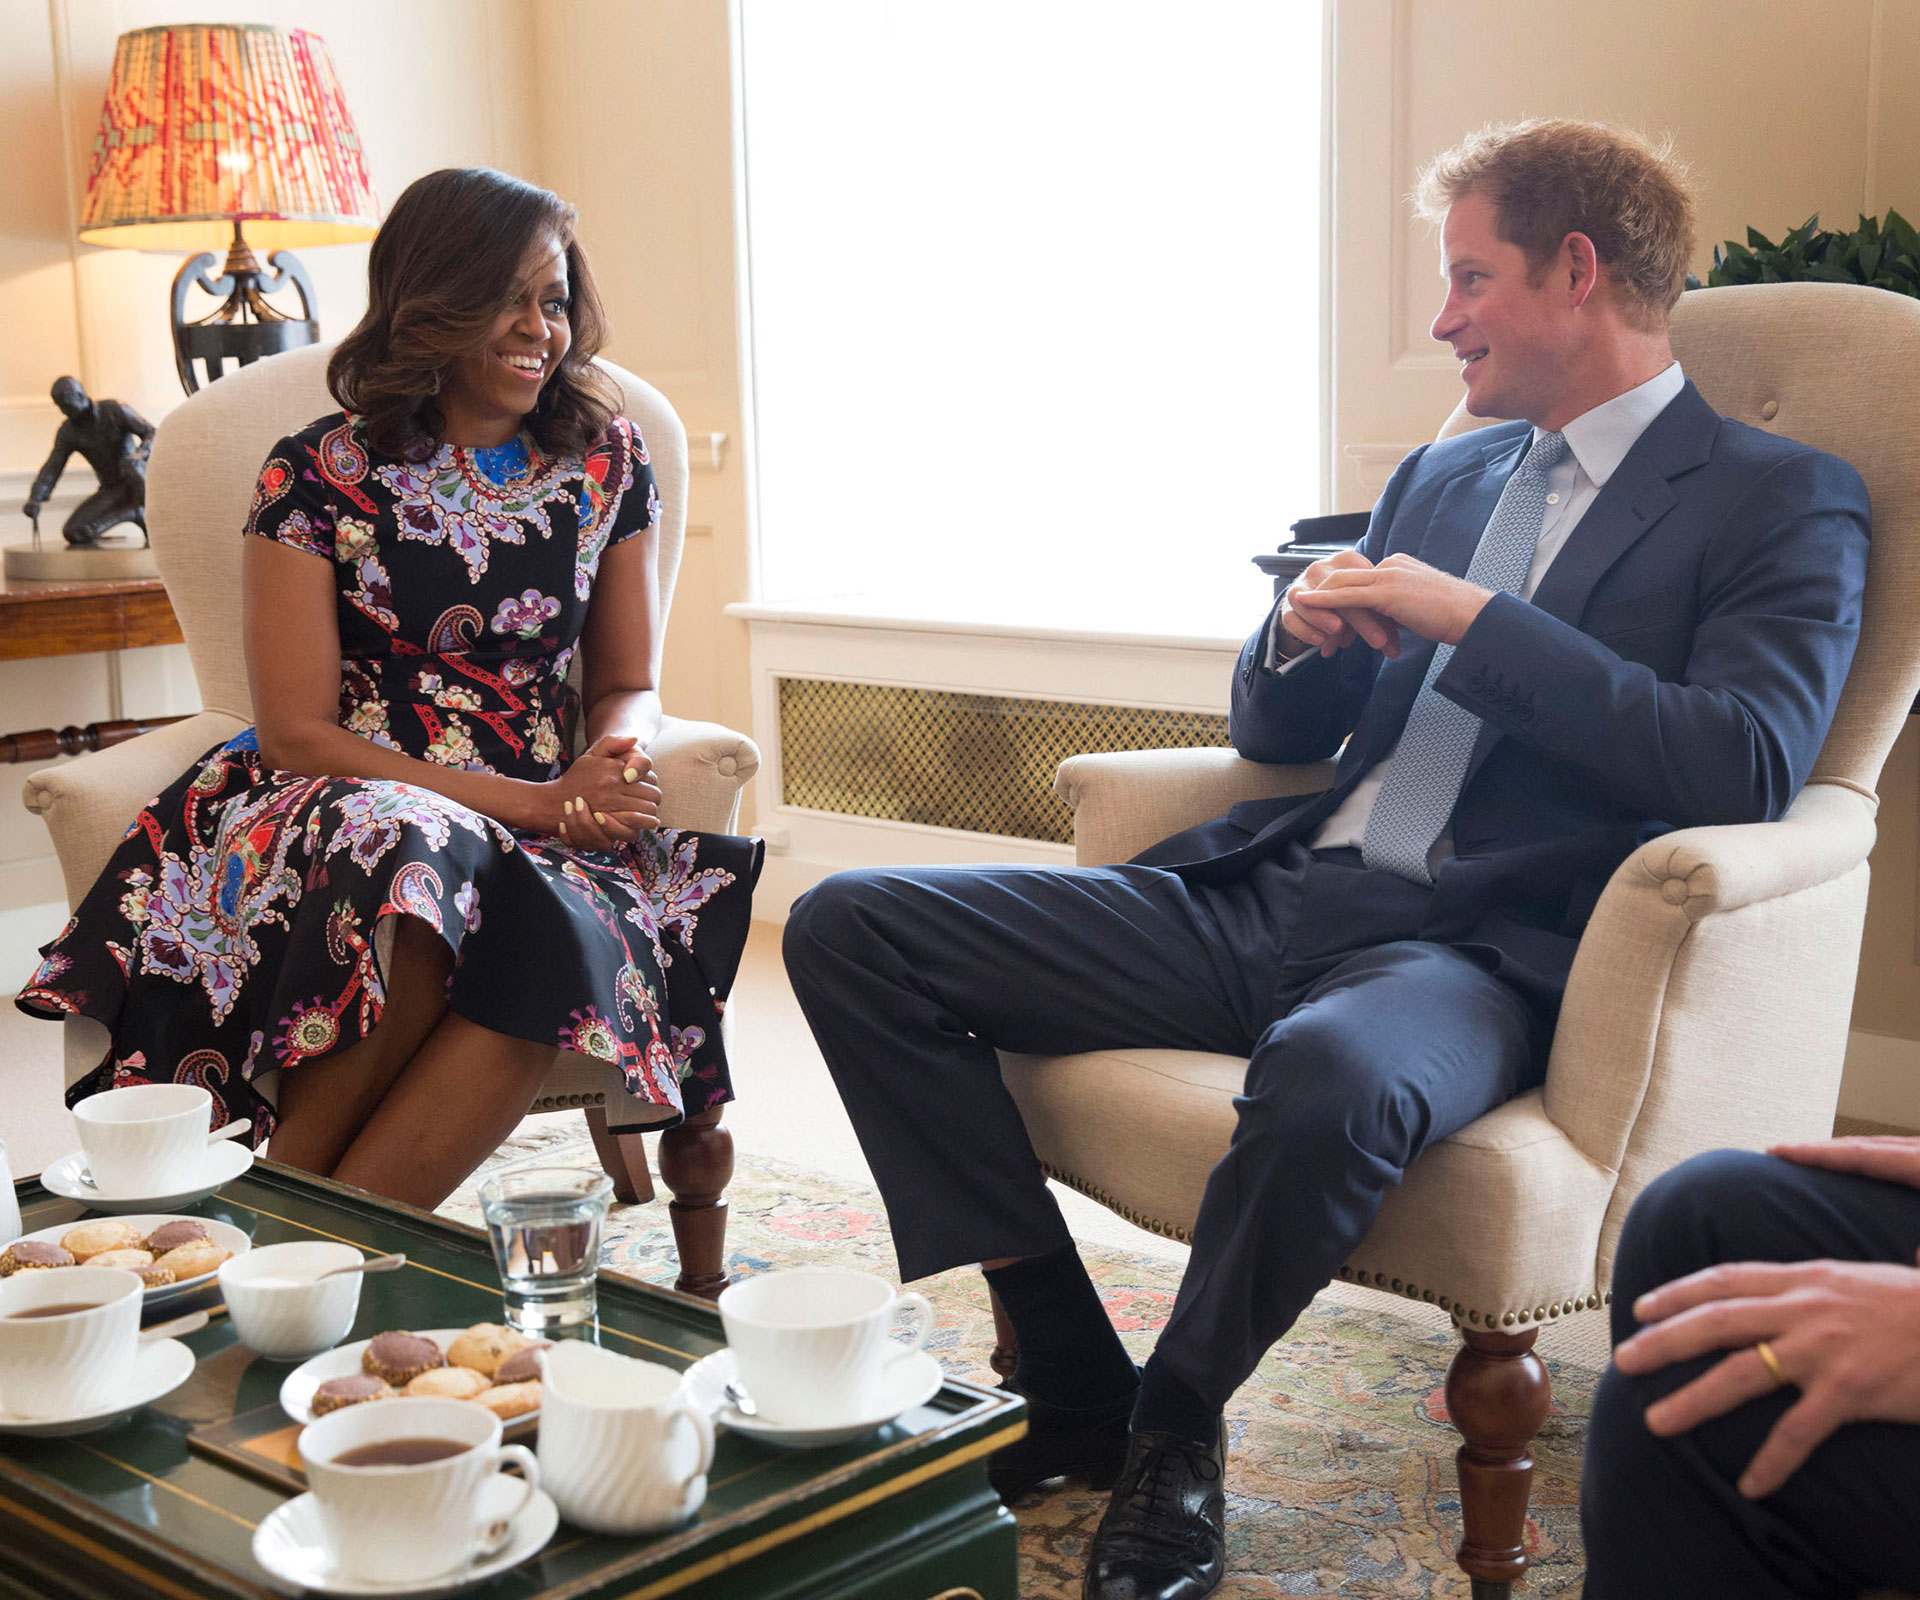 Prince Harry takes tea with Obama girls